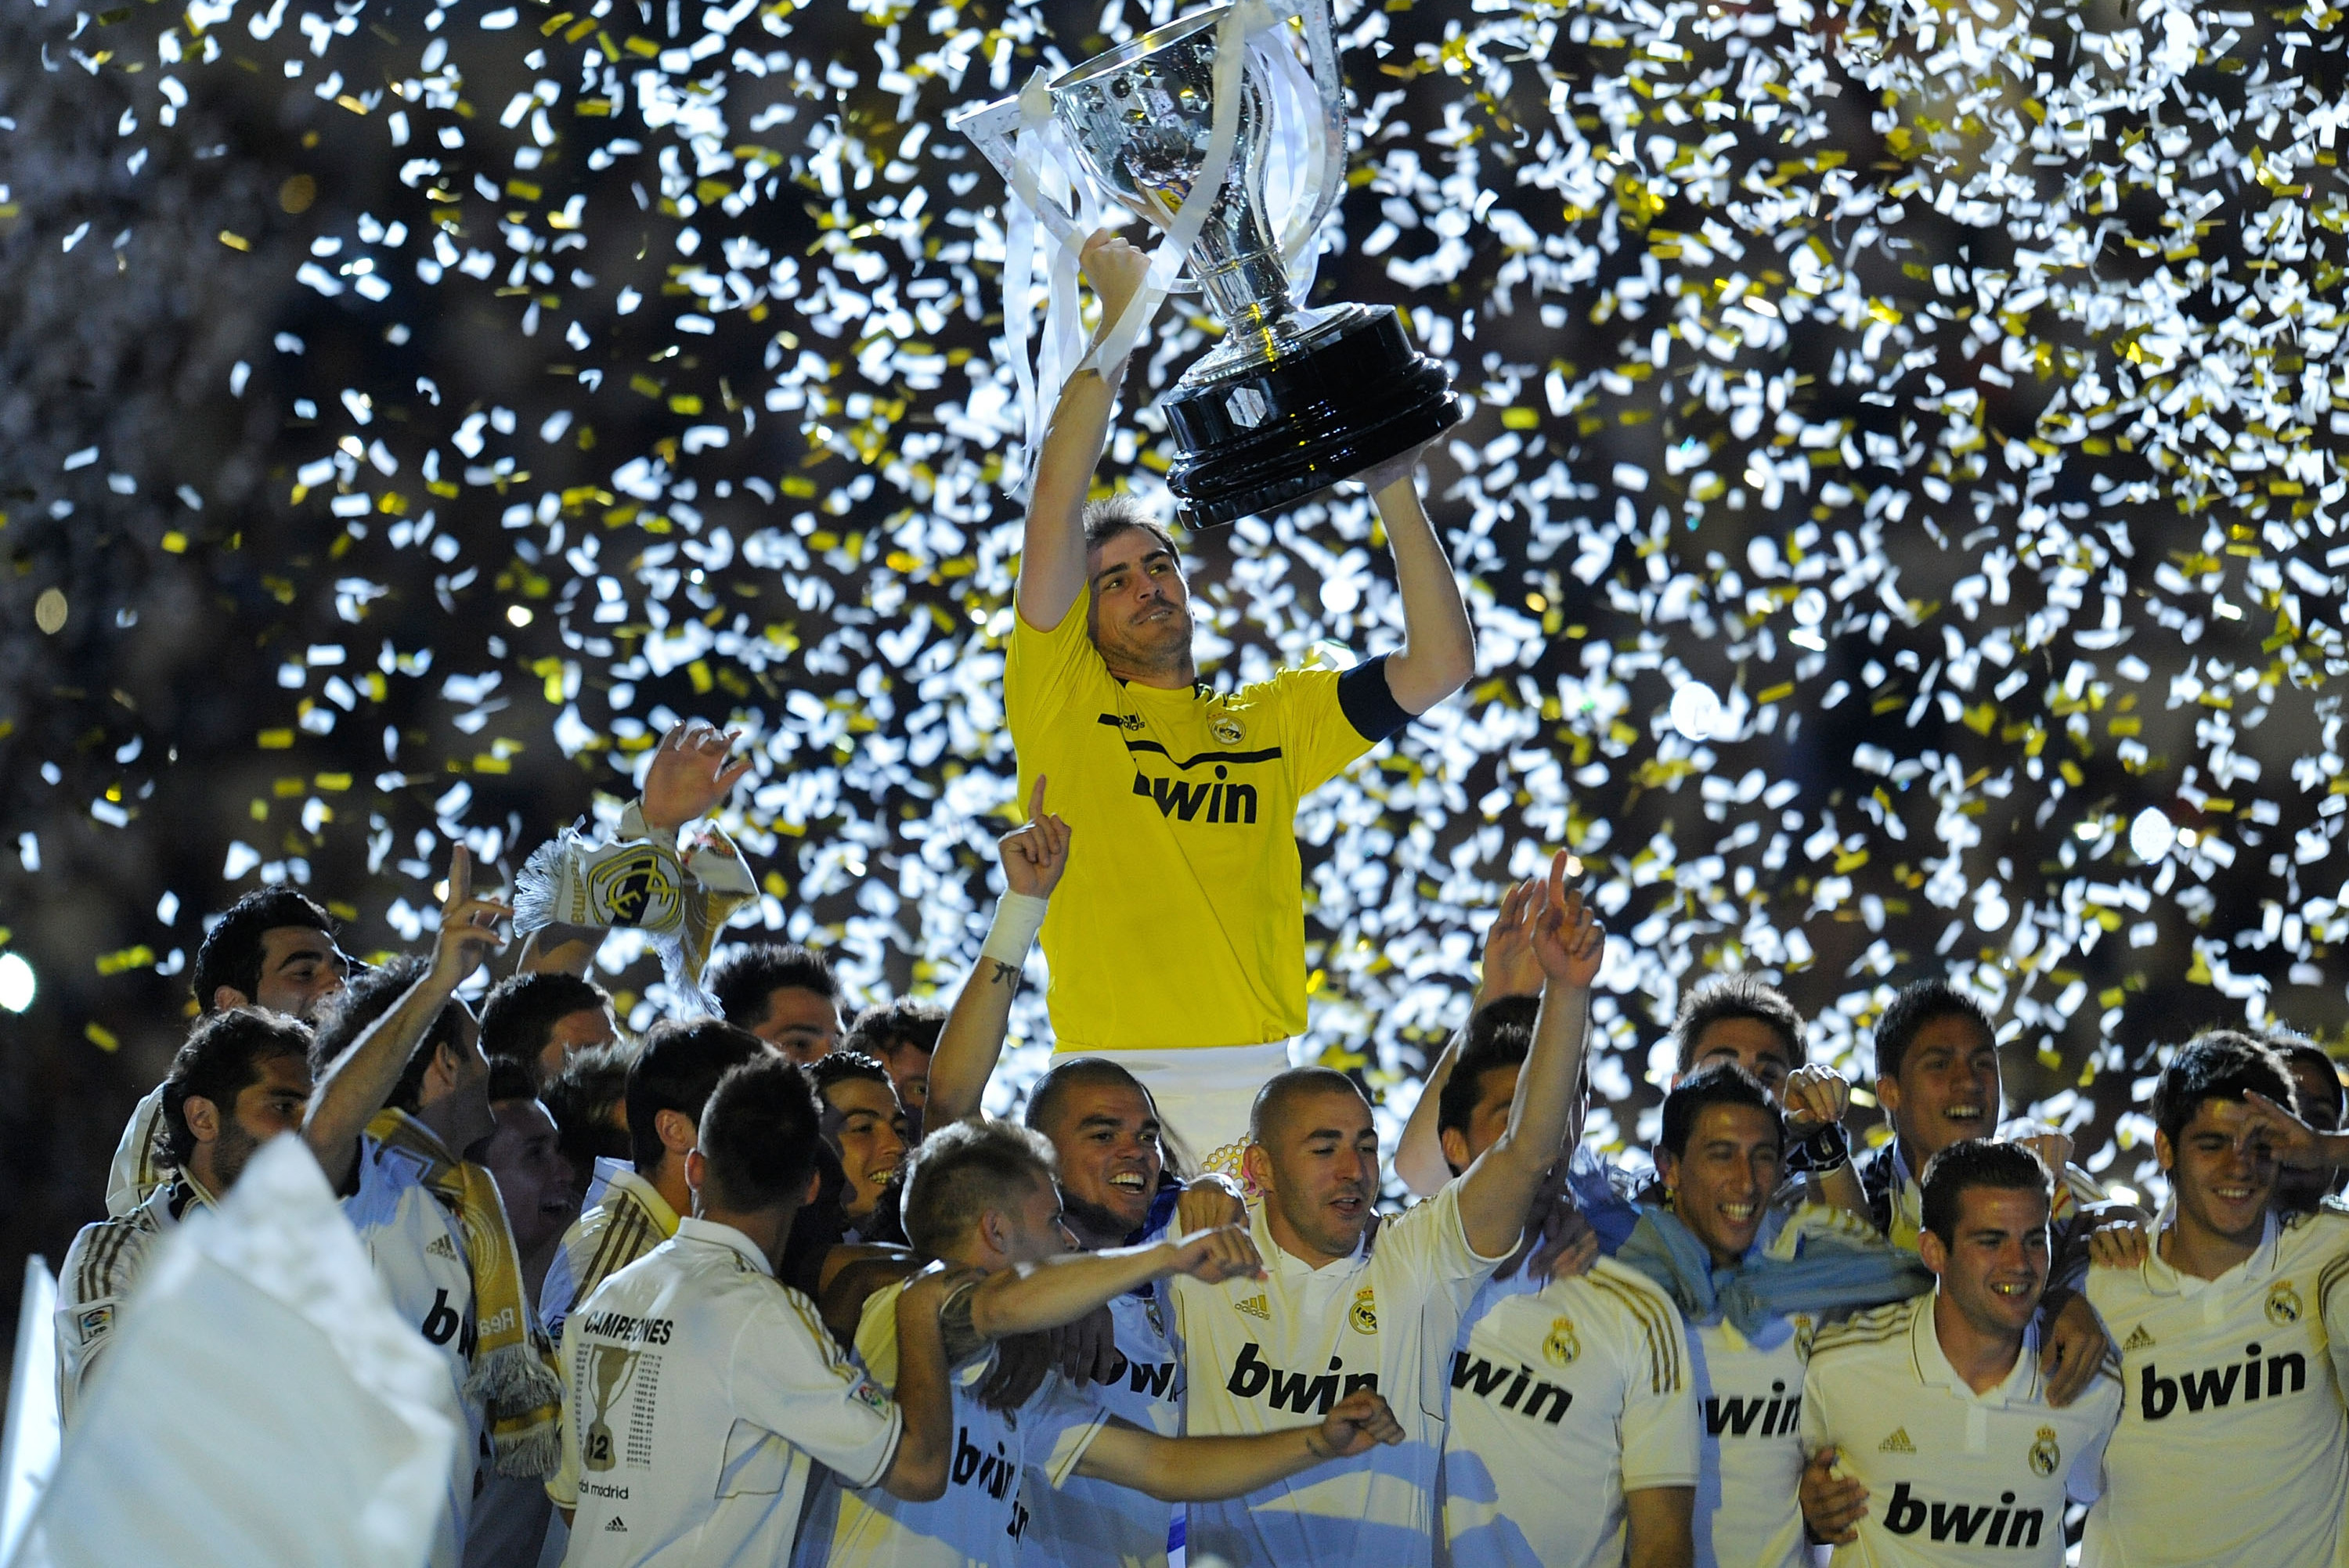 Campeones!! Real Madrid 2011-12 La Liga BBVA: Post Match